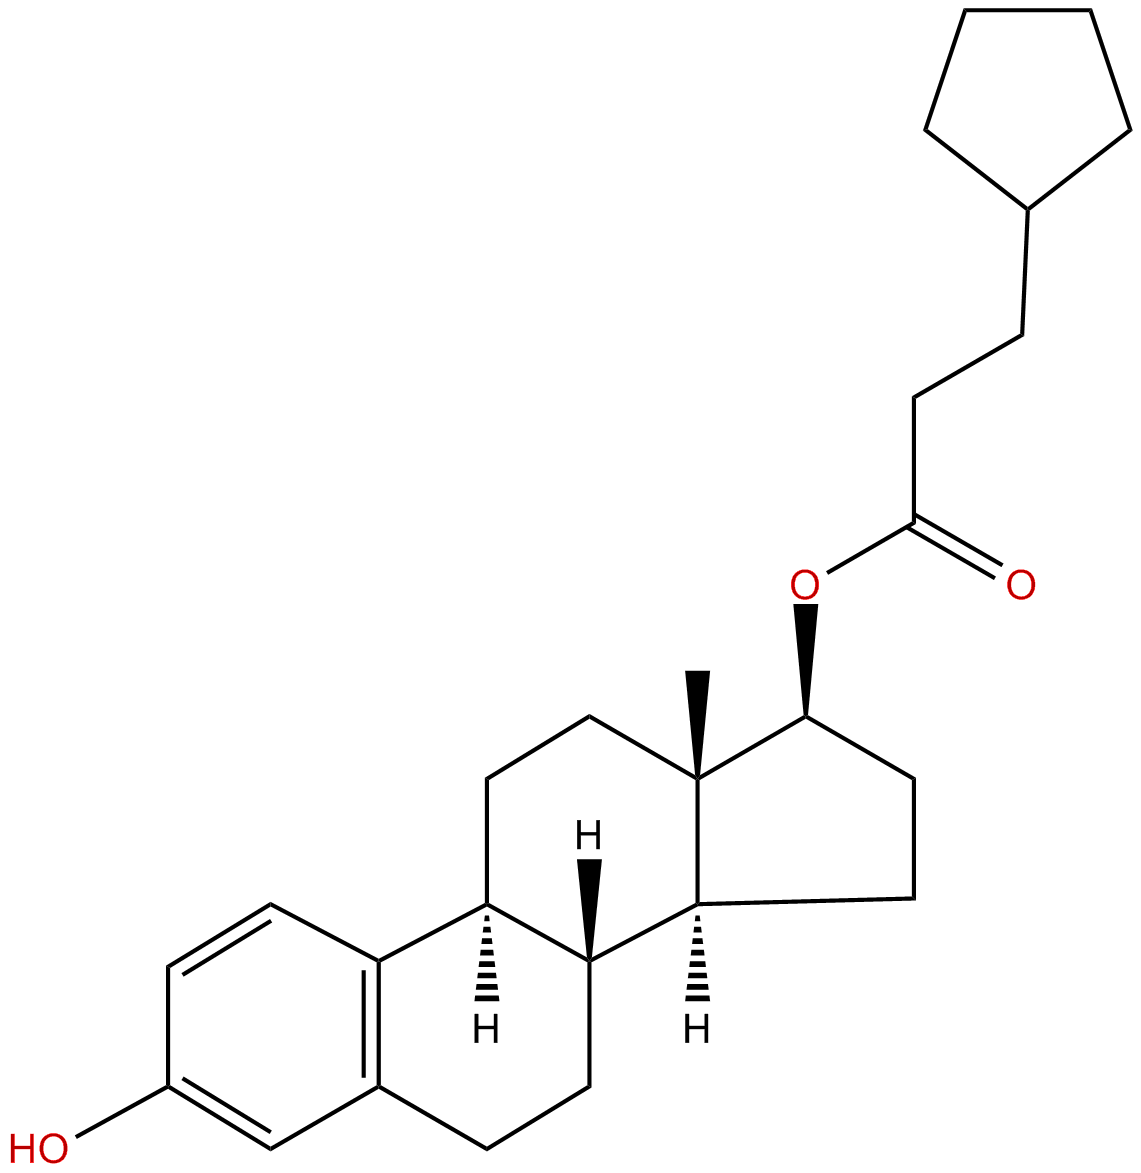 Image of (17.beta.)-estra-1,3,5(10)-triene-3,17-diol 17-cyclopentanepropanoate